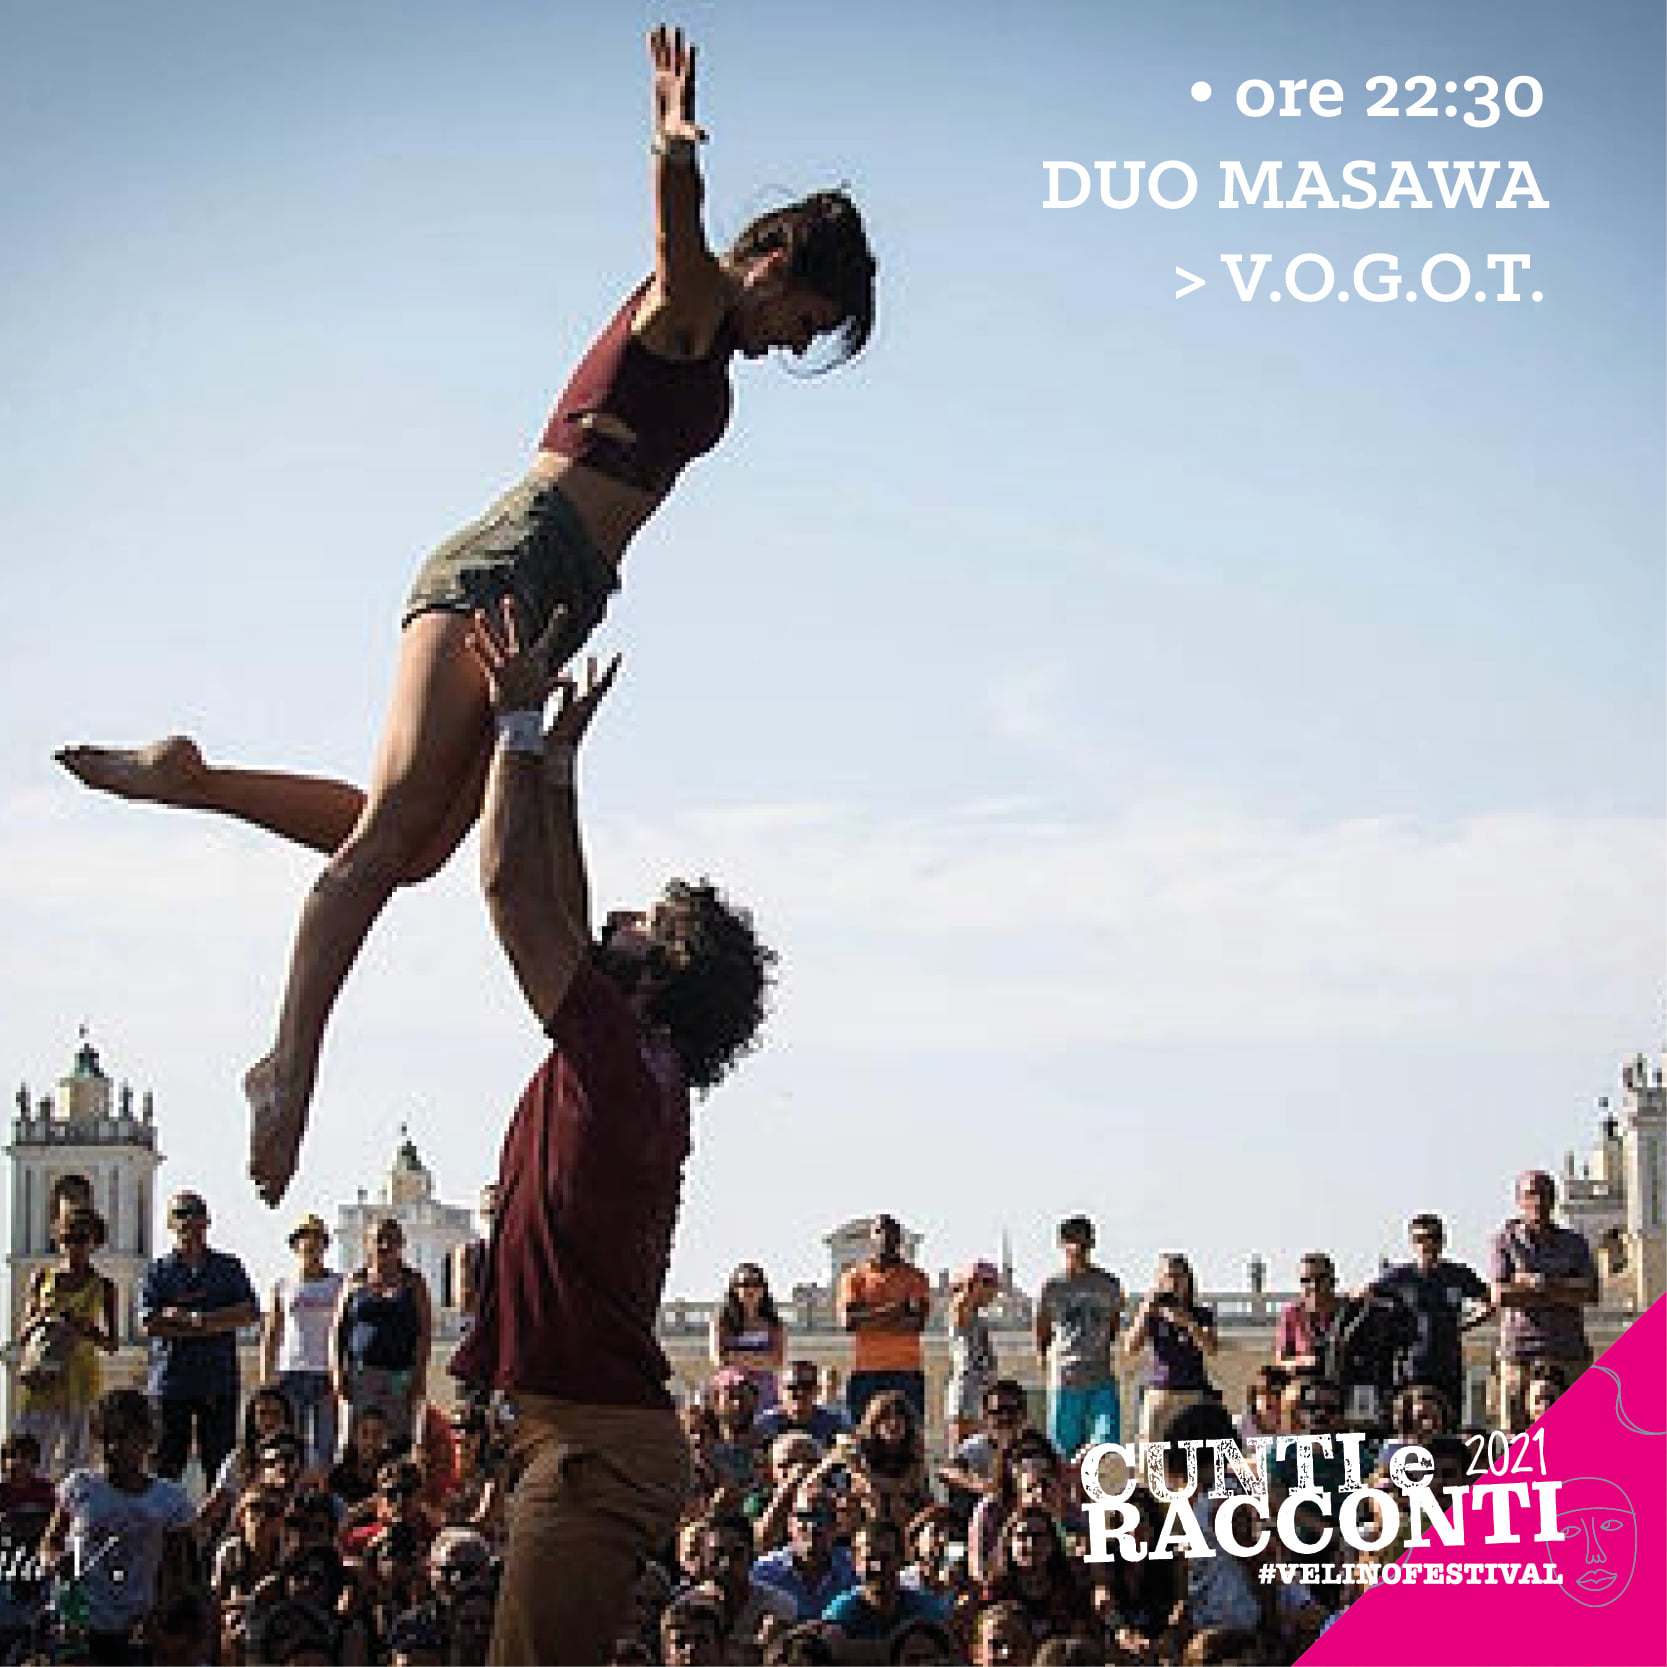 Cunti e Racconti Velino Festival / V.O.G.O.T.